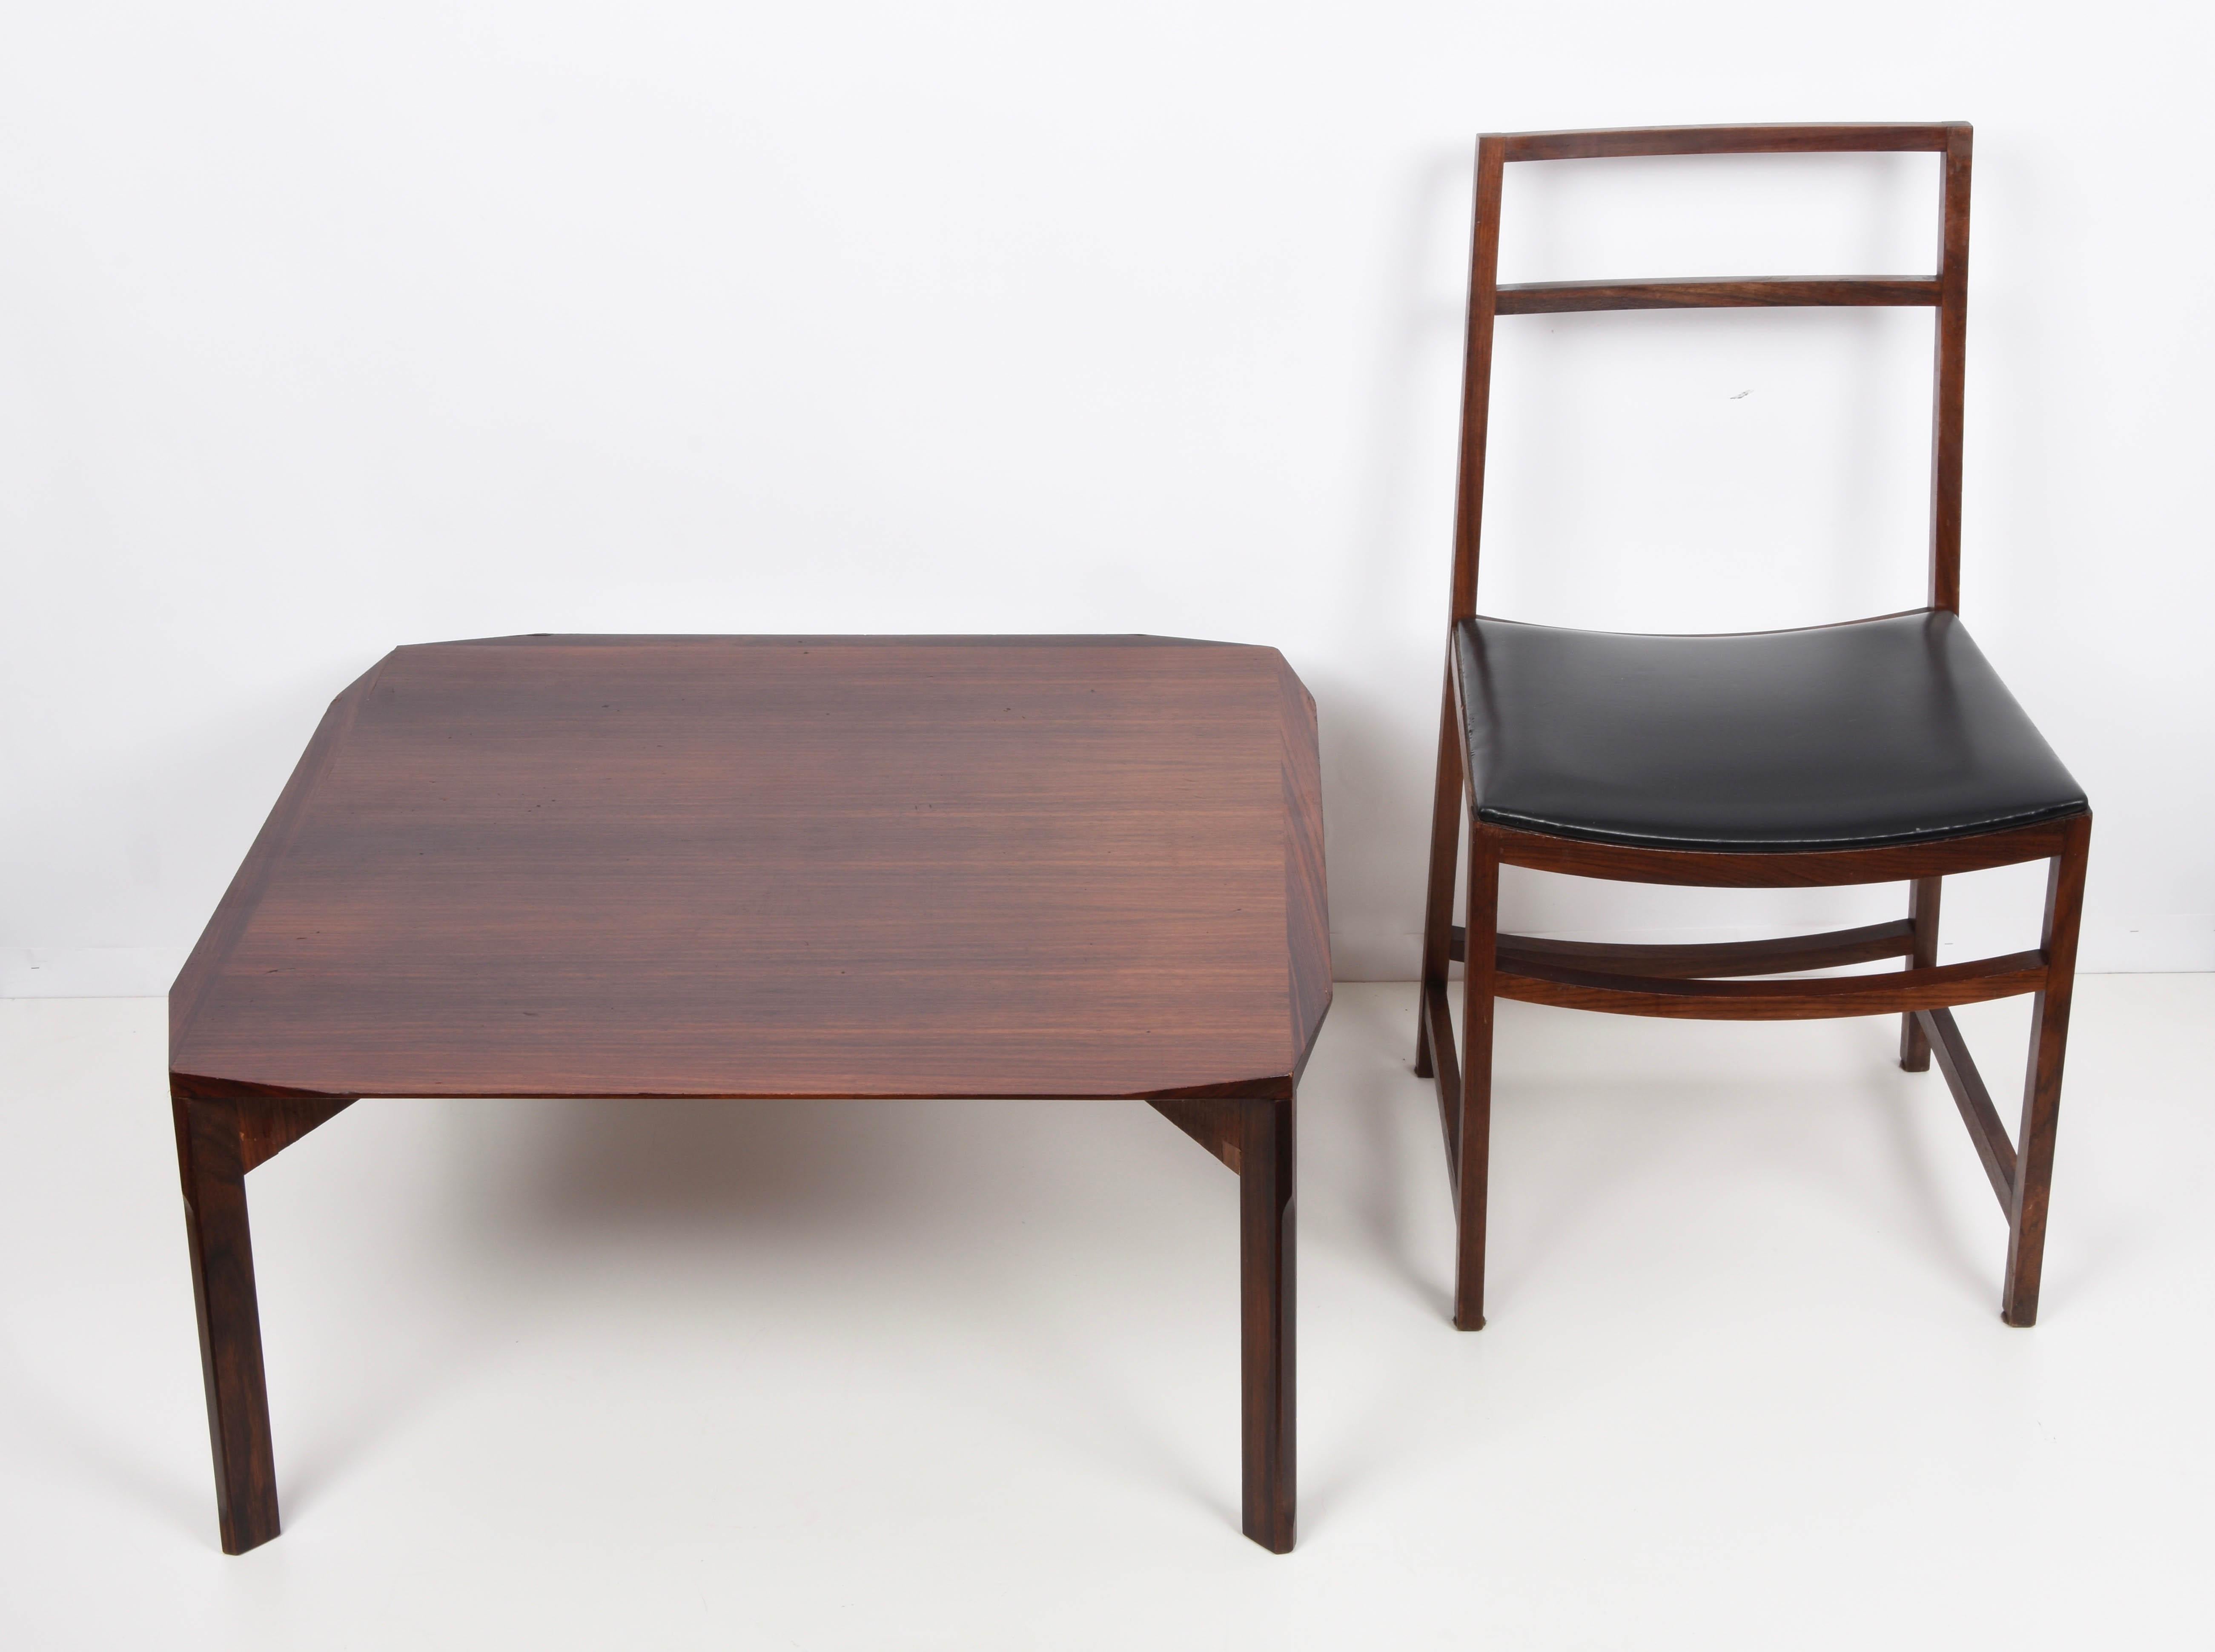 20th Century Mid-Century Modern Italian Square Wooden Coffee Table, 1960s